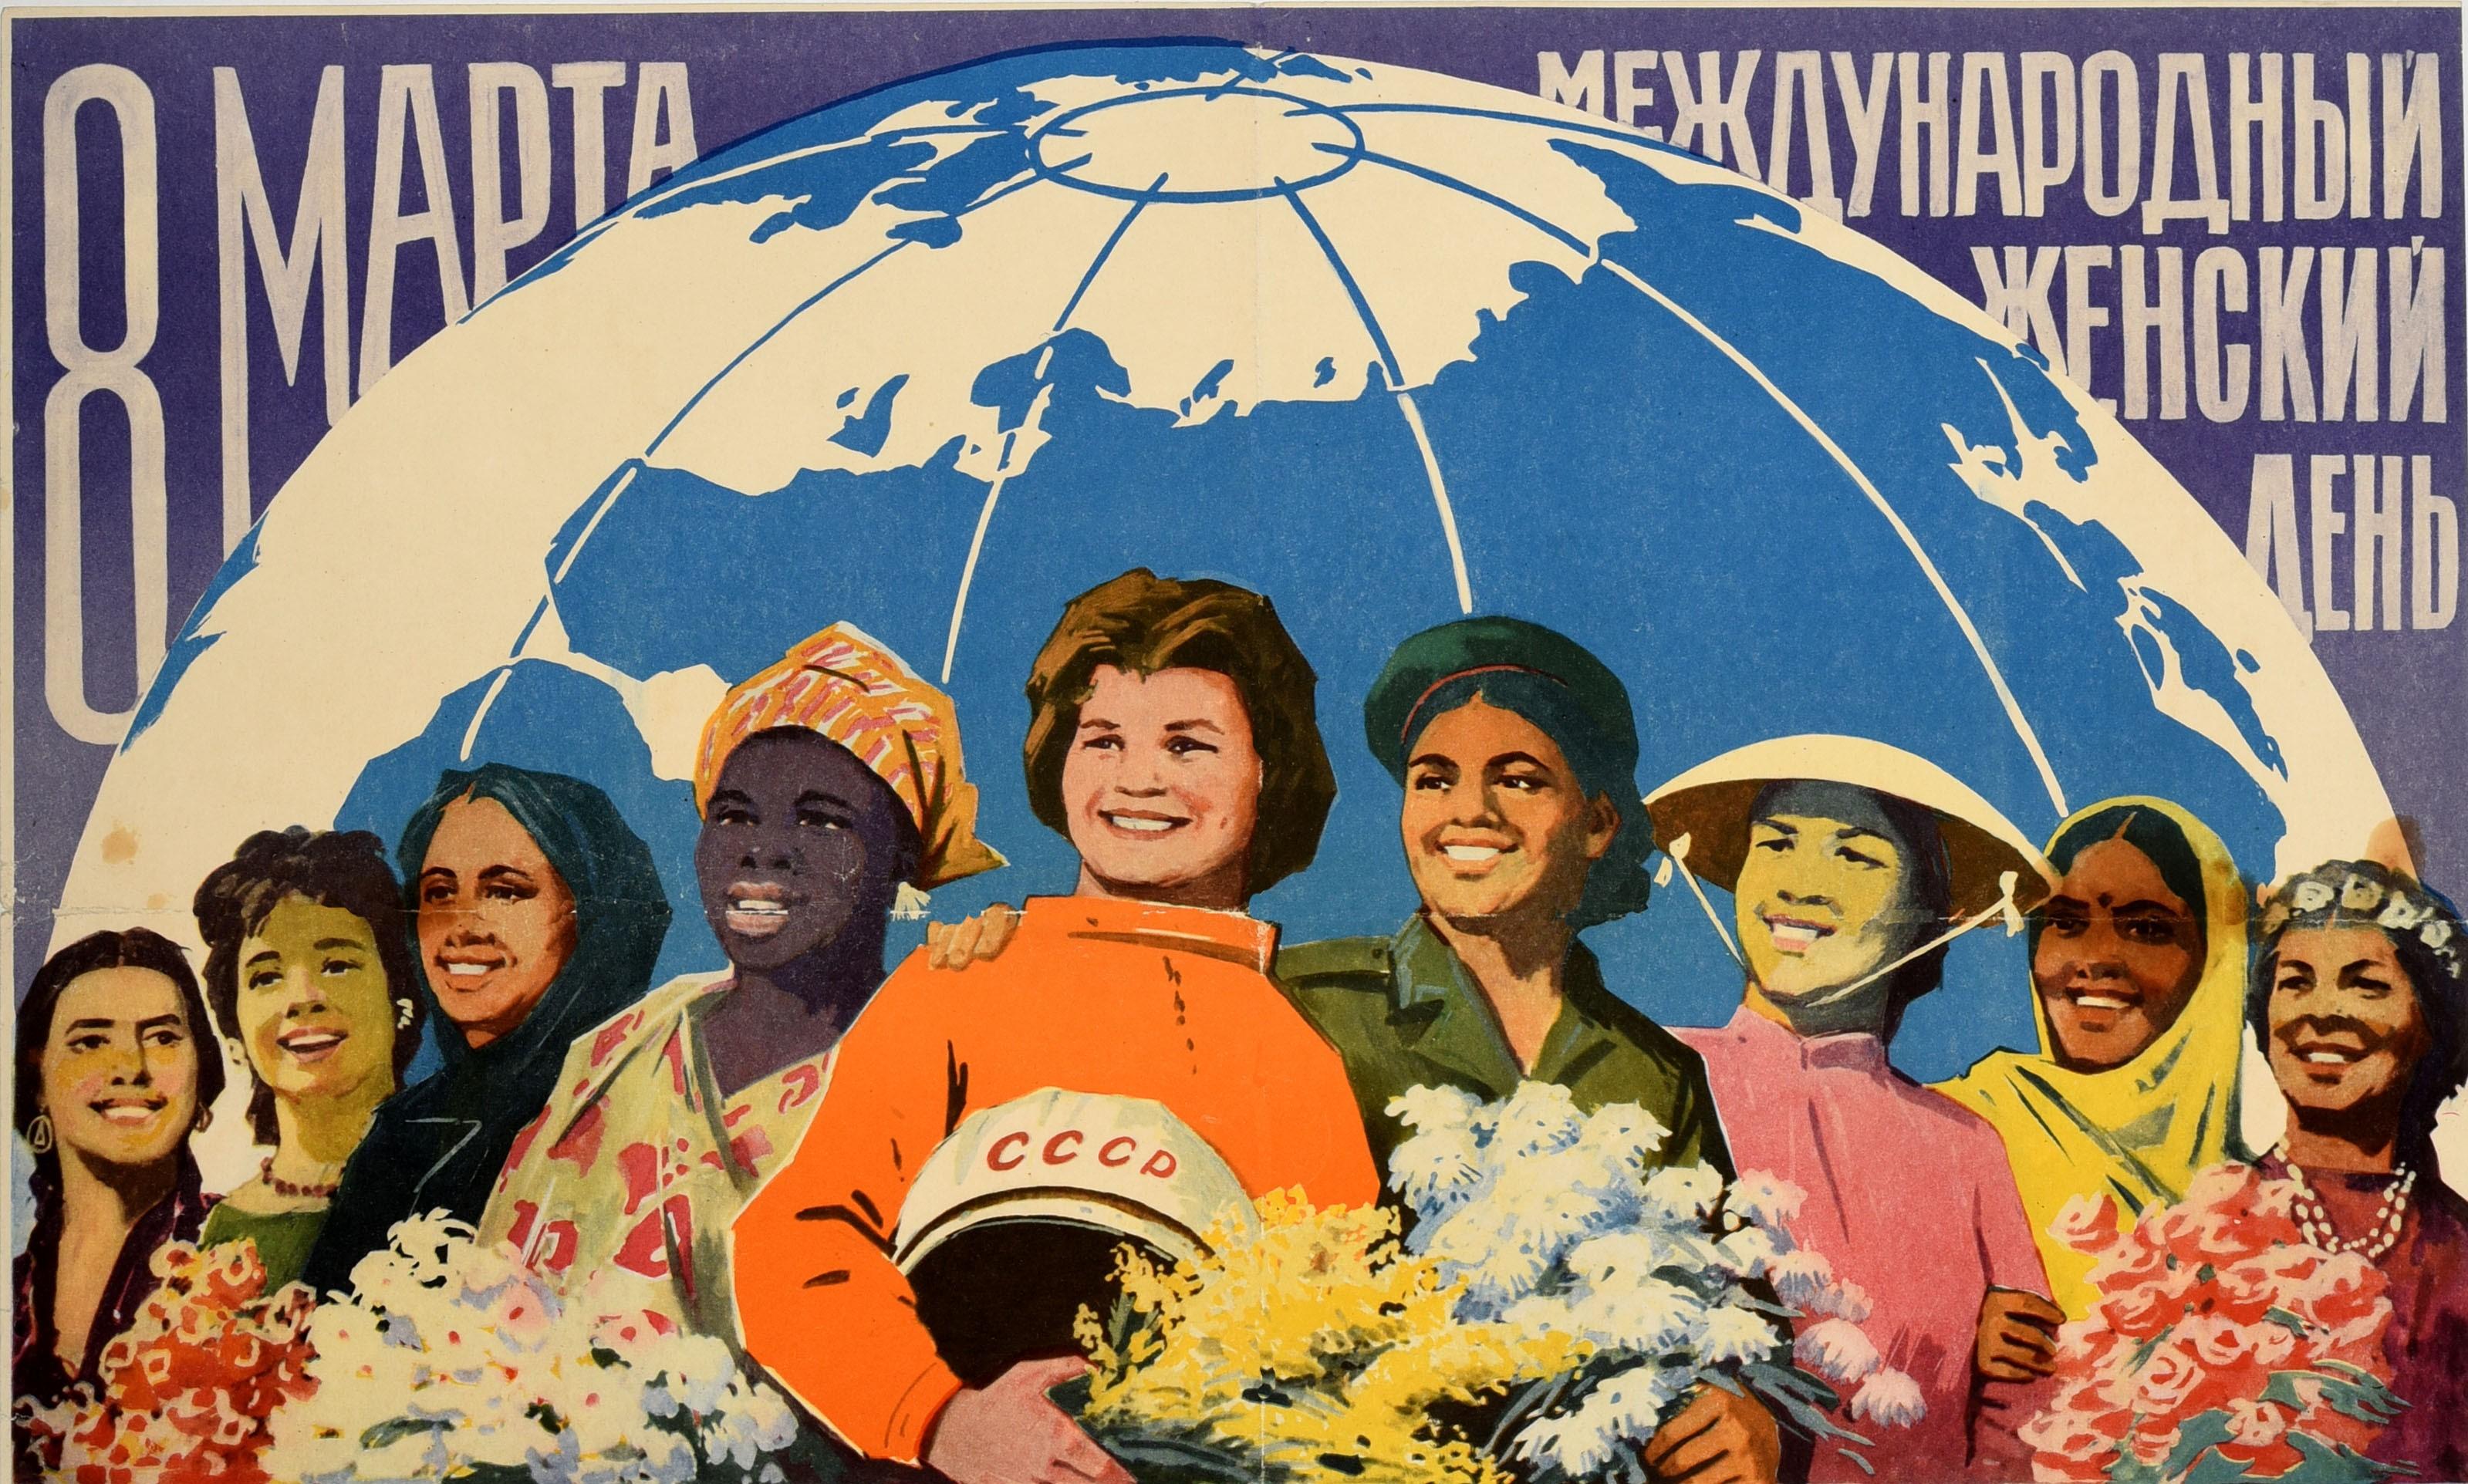 Original Vintage Poster International Women's Day 8 March Valentina Tereshkova - Print by Unknown